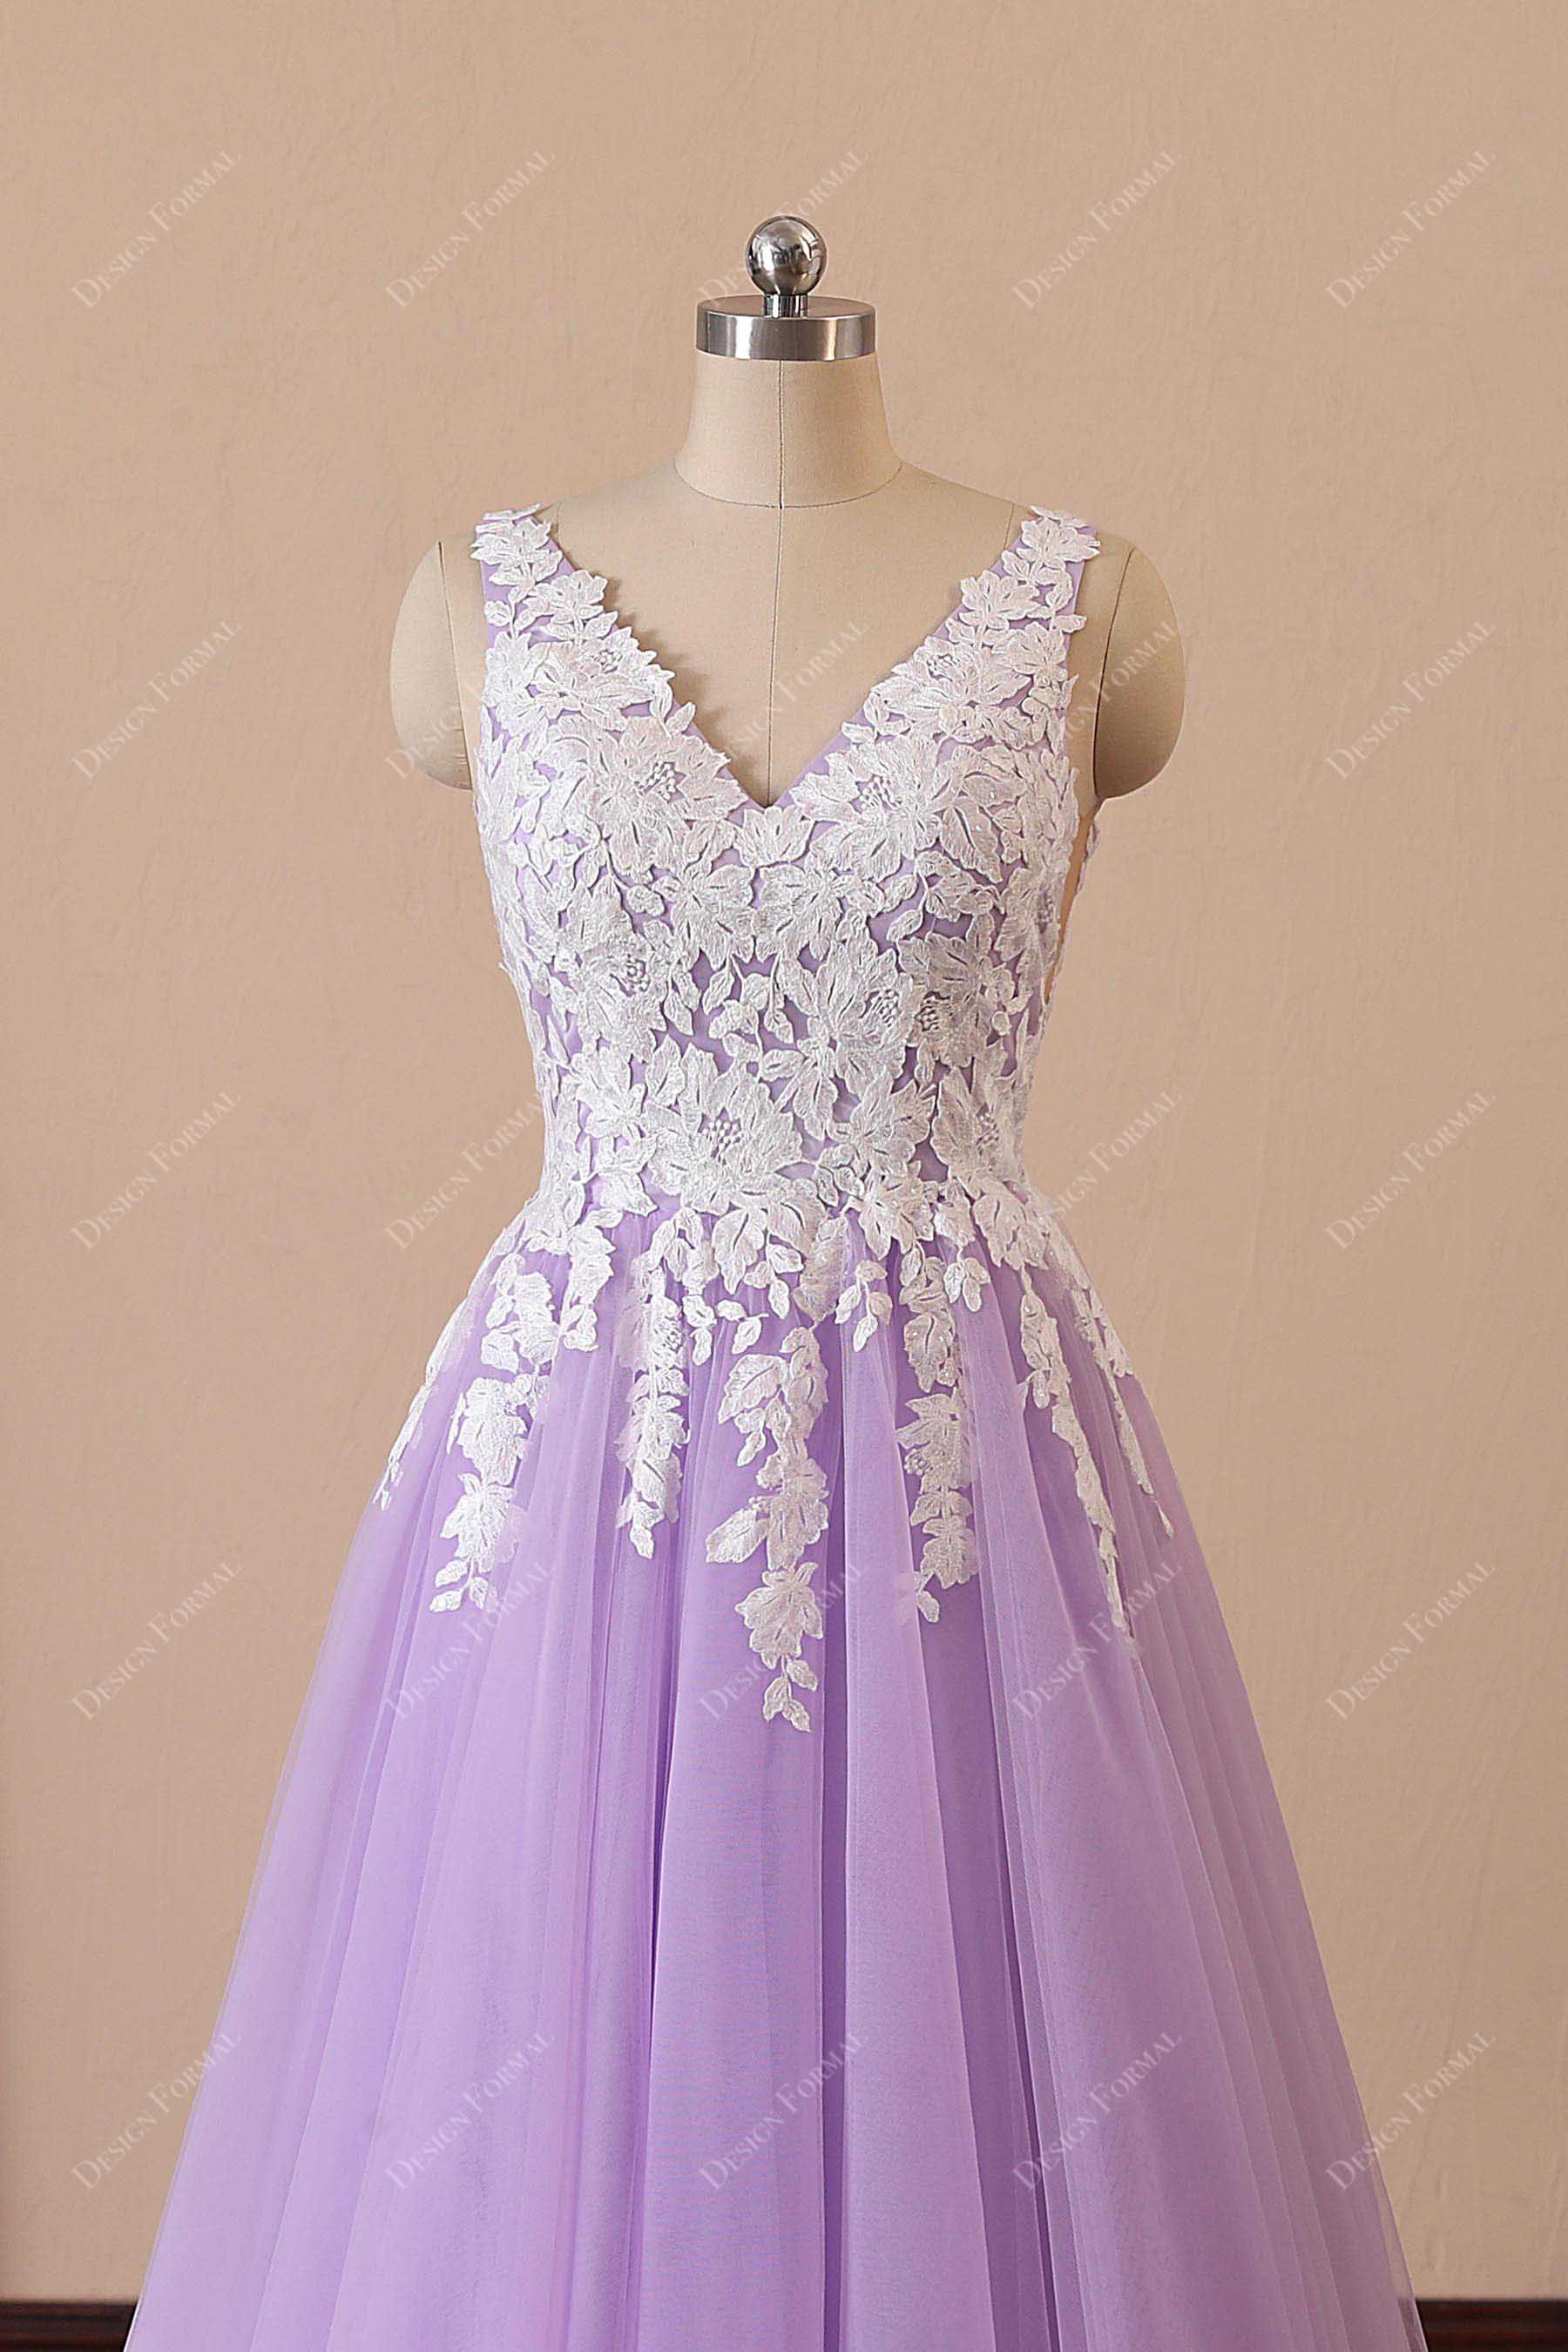 V-neck lace overlaid lilac prom dress 